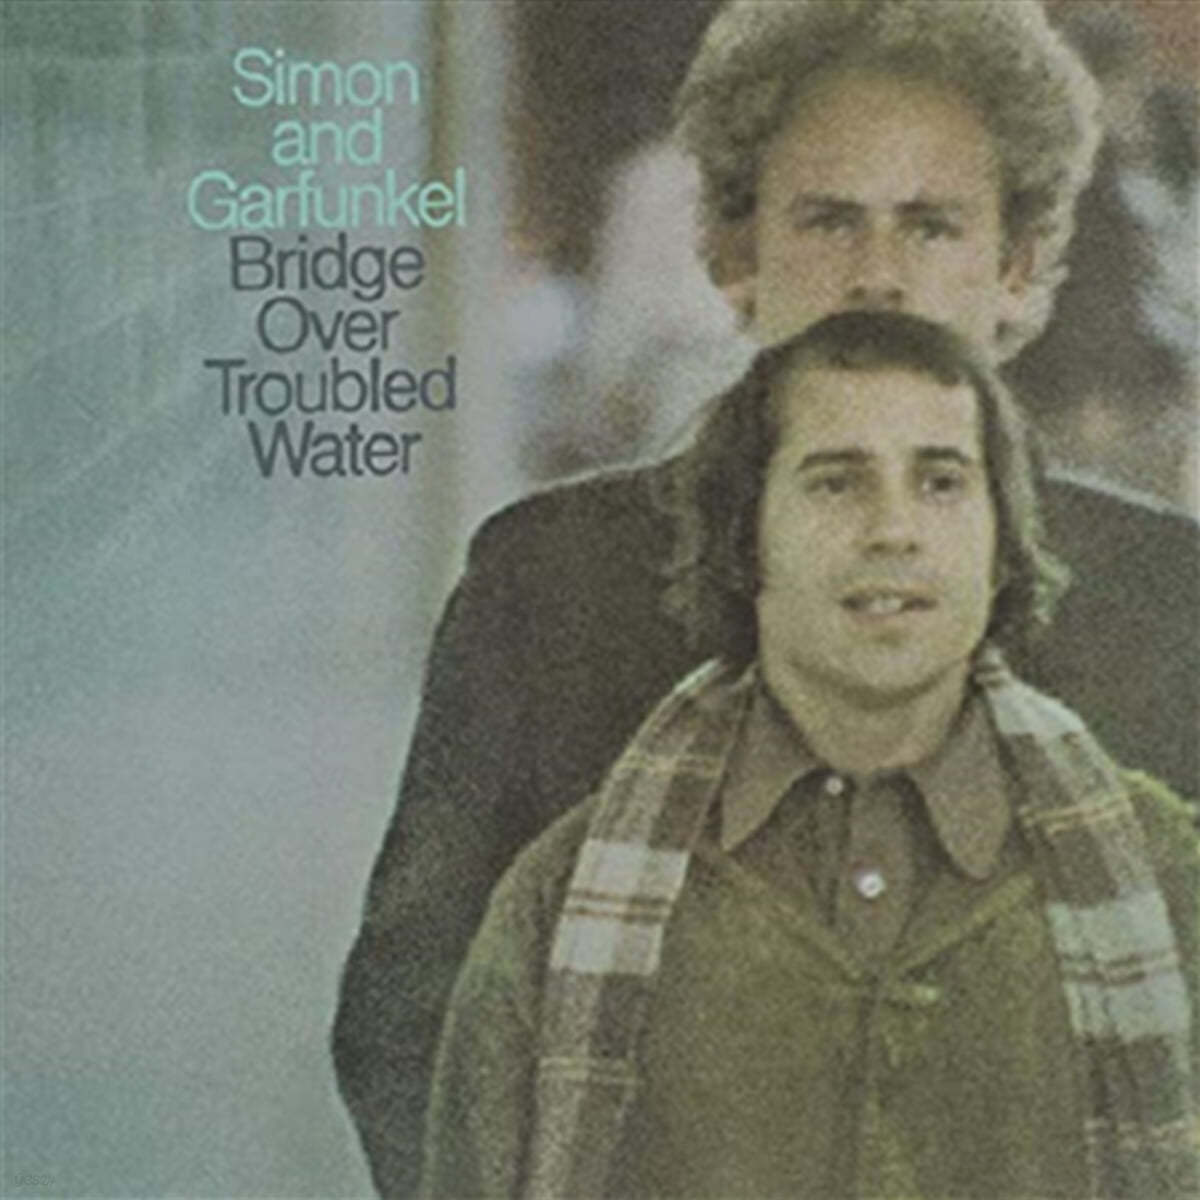 Simon & Garfunkel (사이먼 앤 가펑클) - Bridge Over Troubled Water [투명 컬러 LP] 